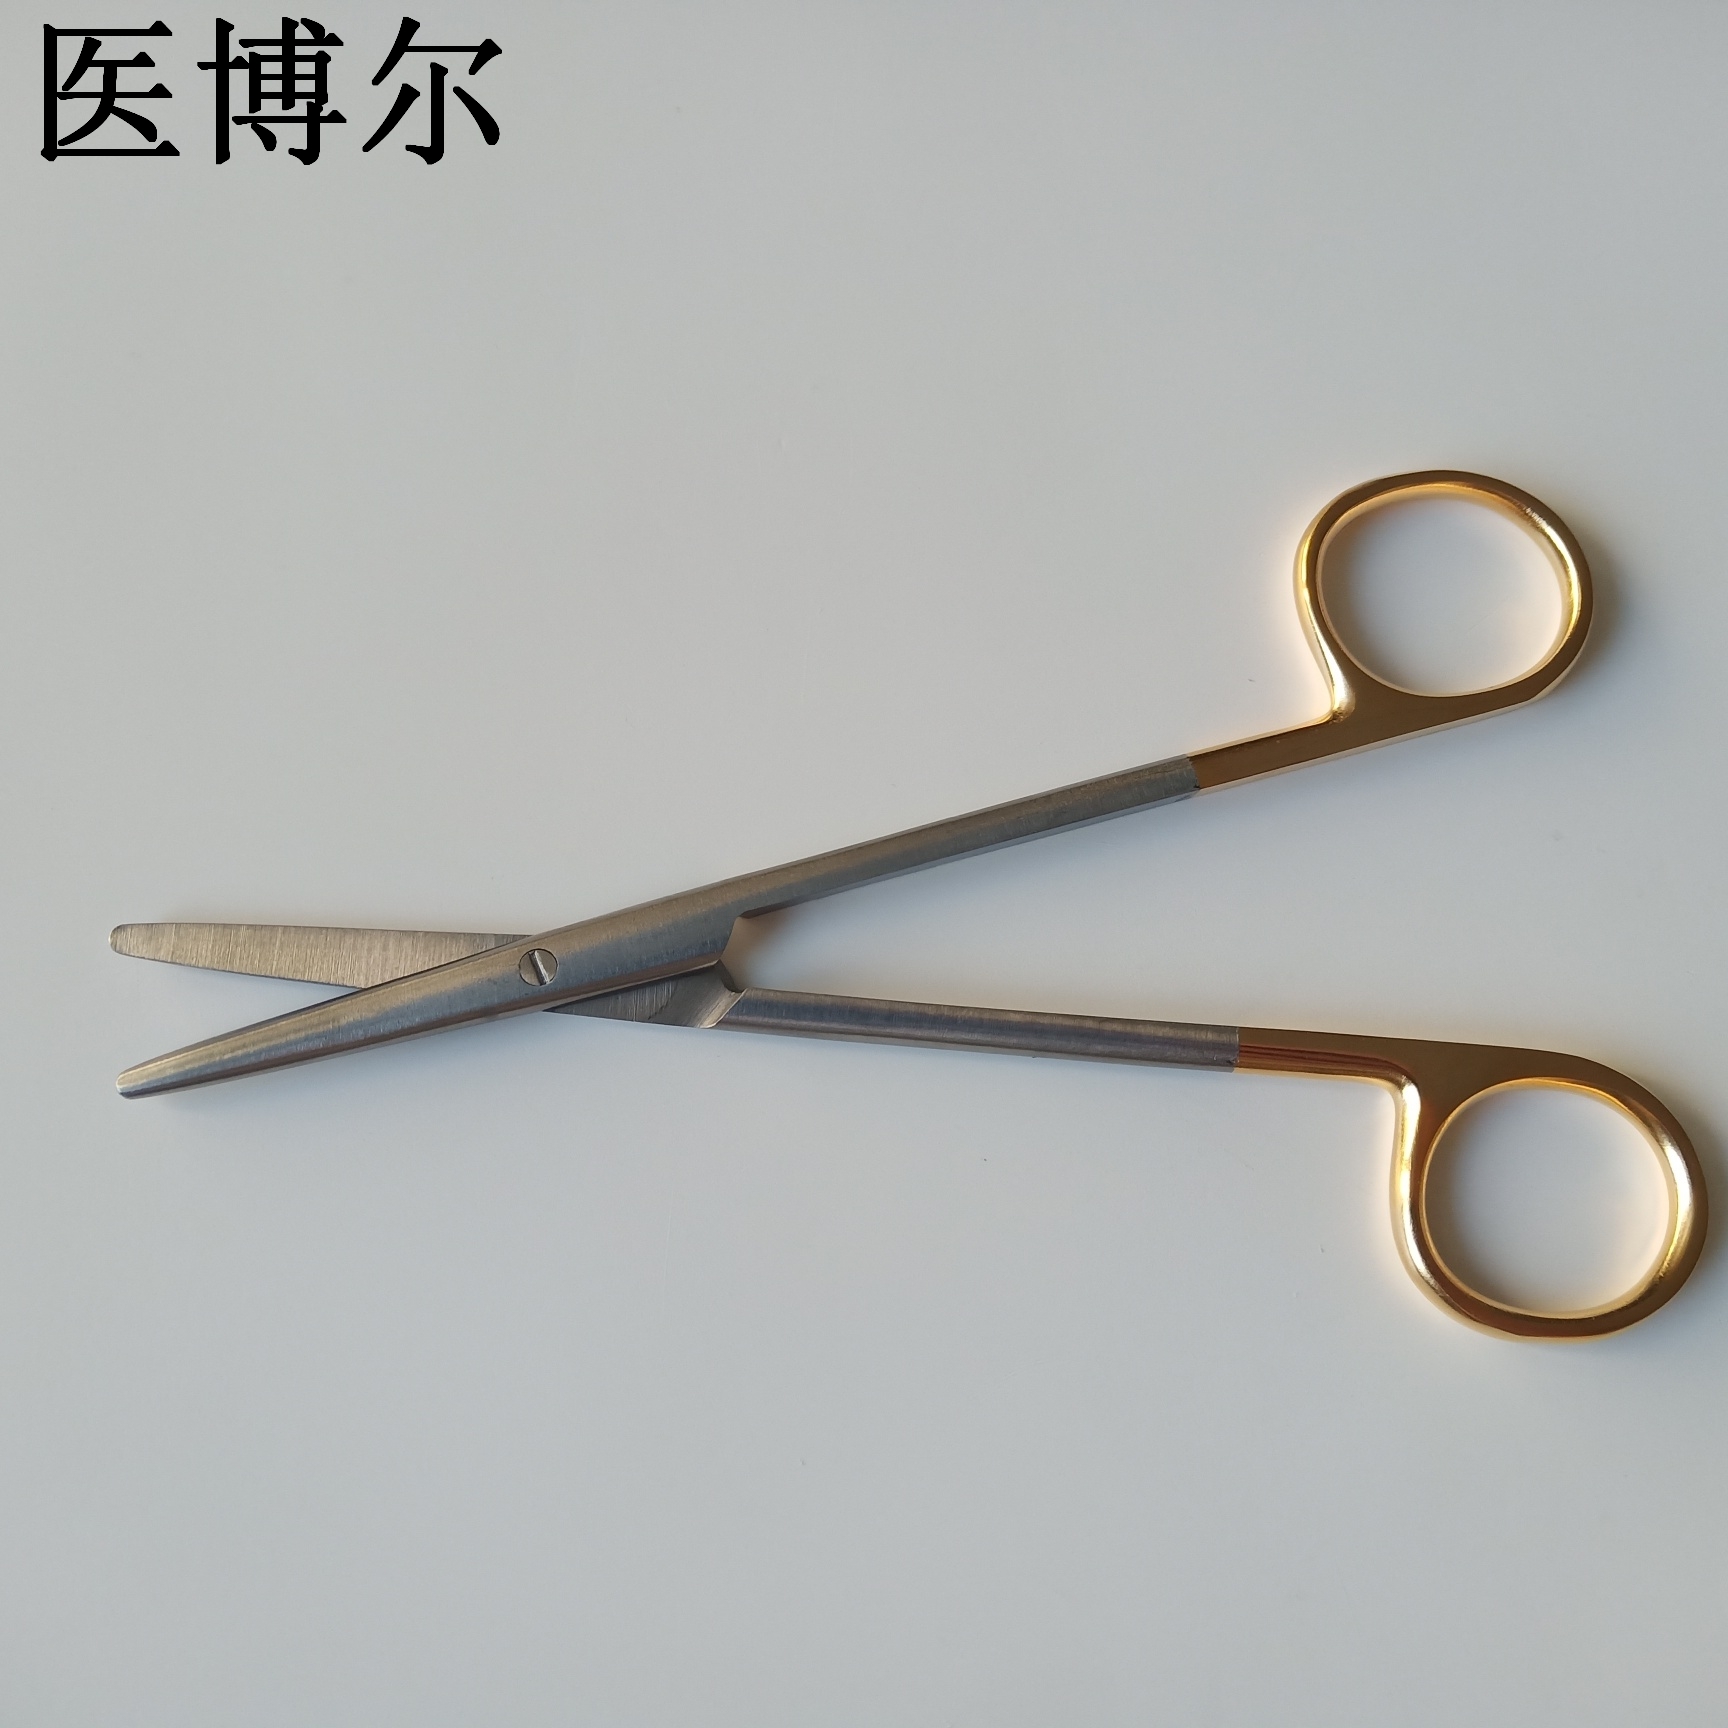 14cm精细直圆剪刀 (6).jpg